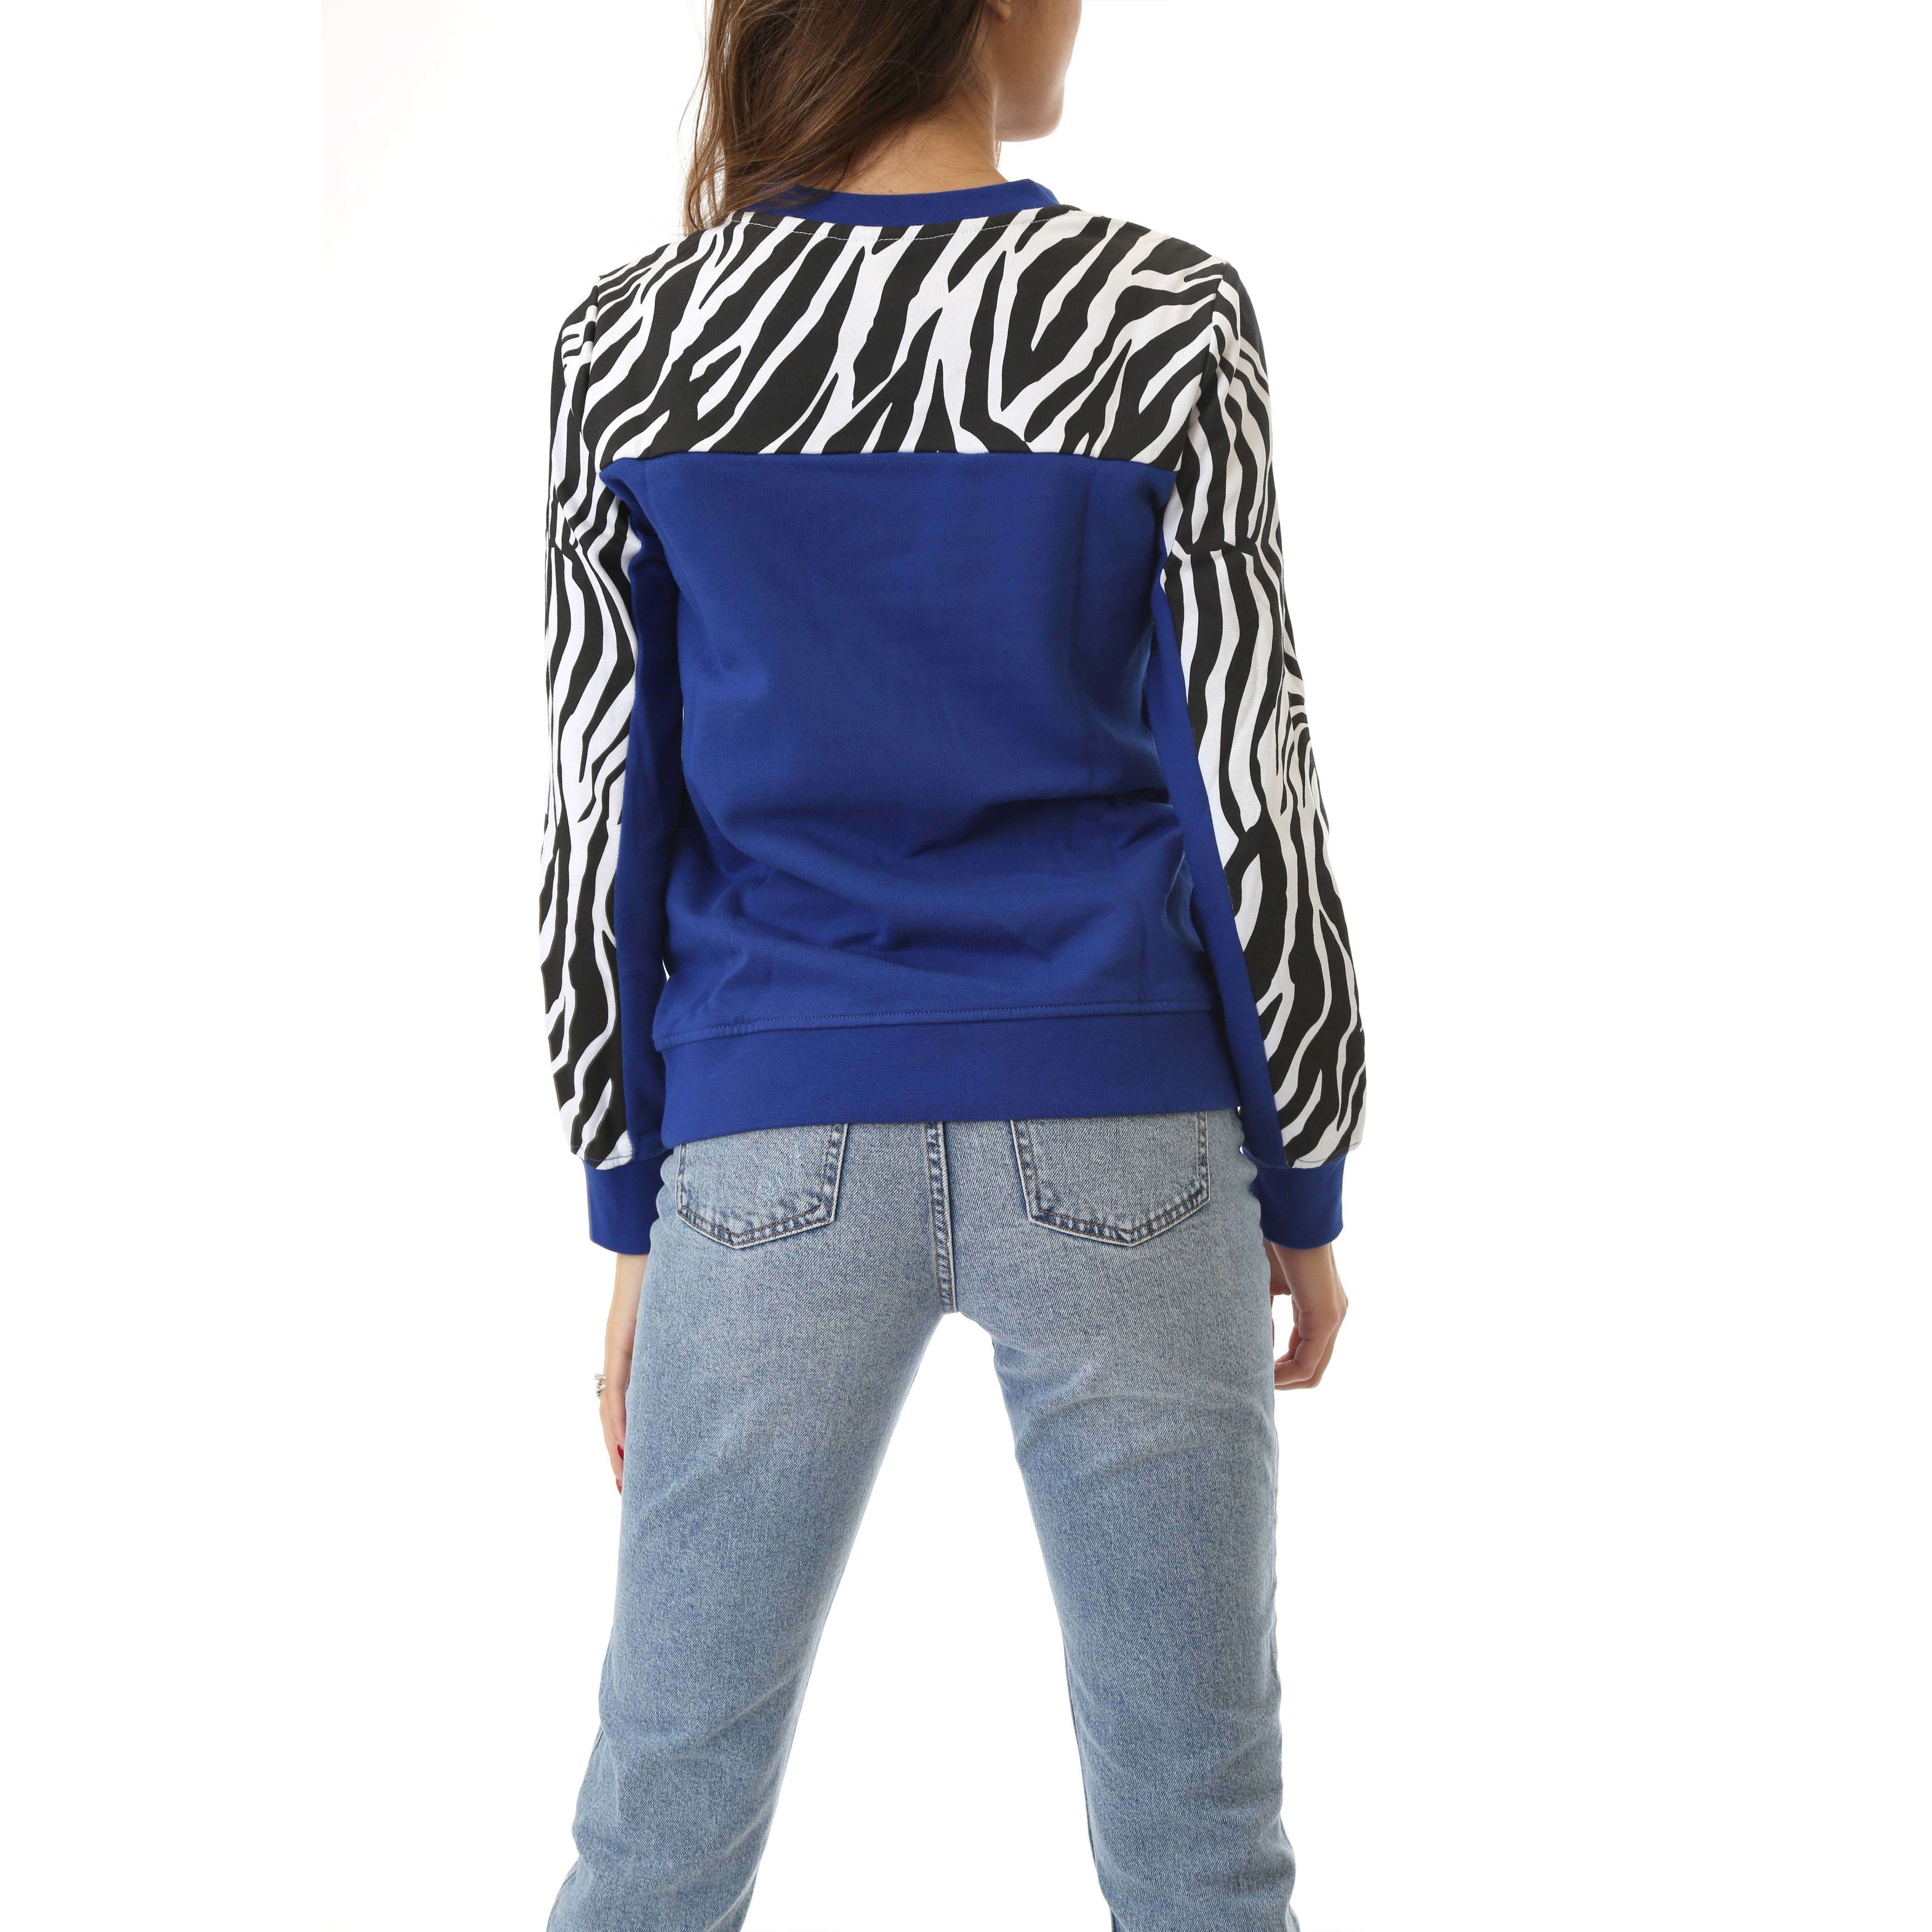 Vans Donna Felpa Sweatshirt Manica Lunga Girocollo Zebra Navy